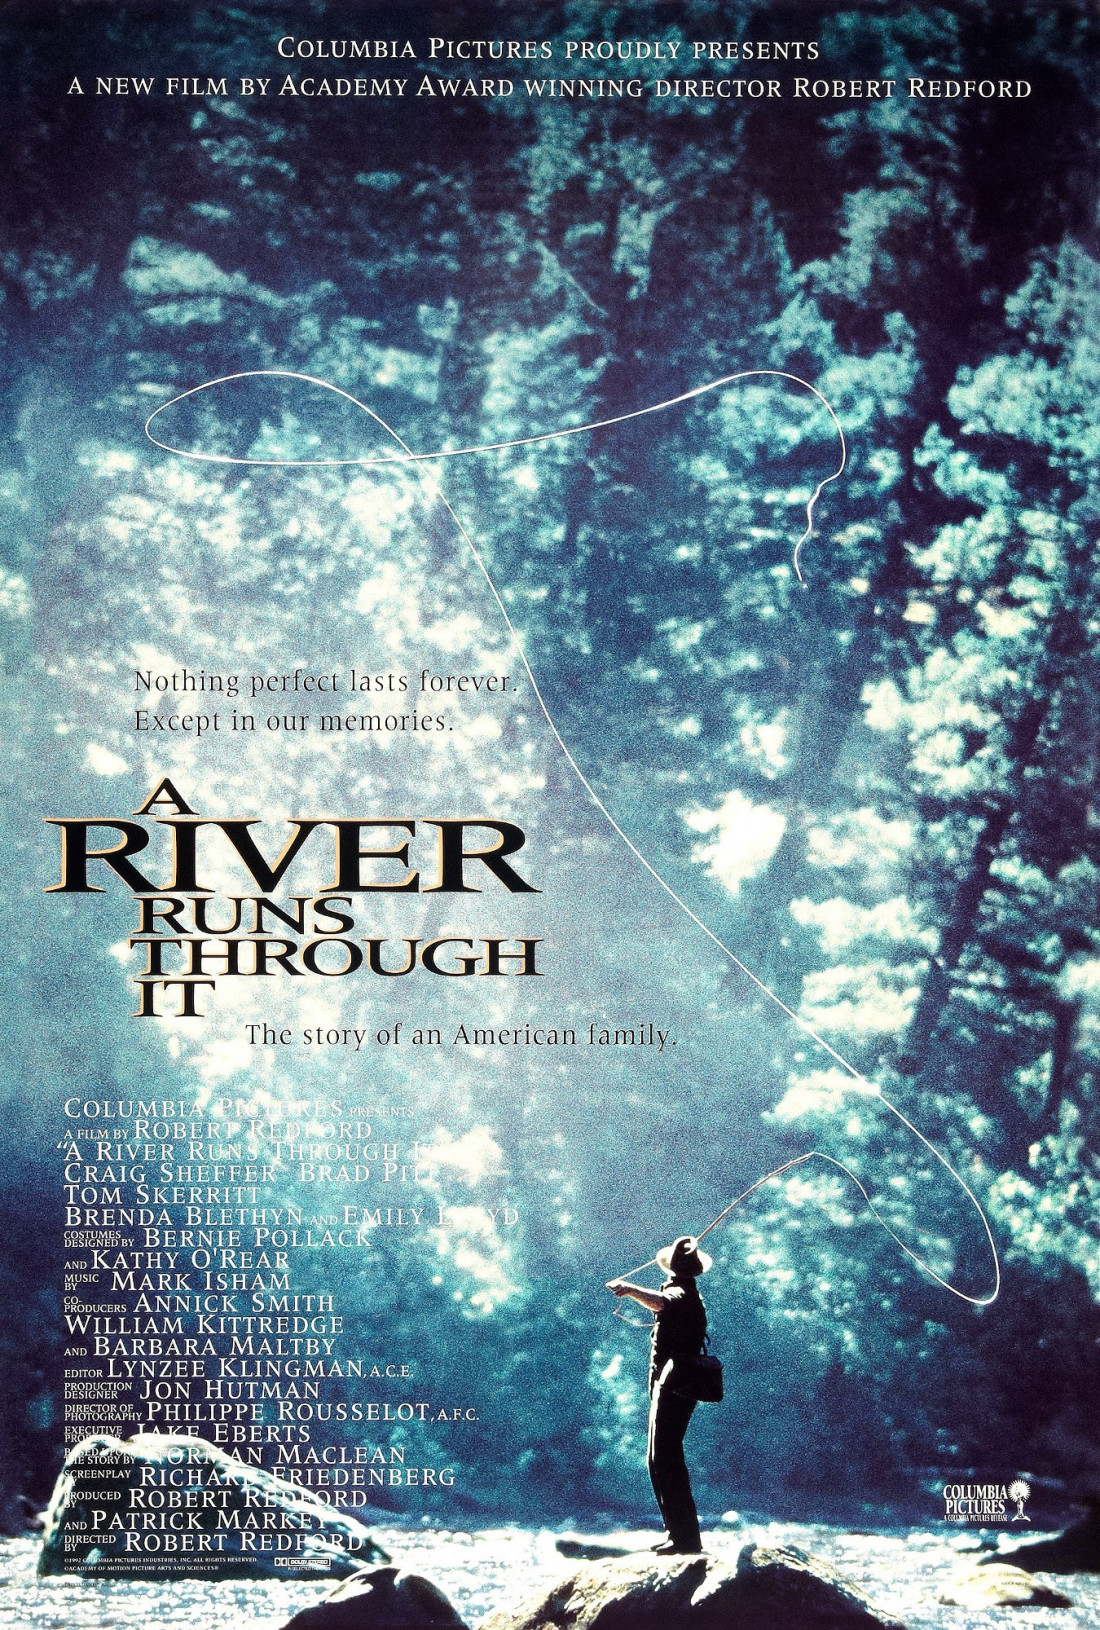 [Mark Isham] 흐르는 강물처럼 OST (A River Through It) Photo-Image